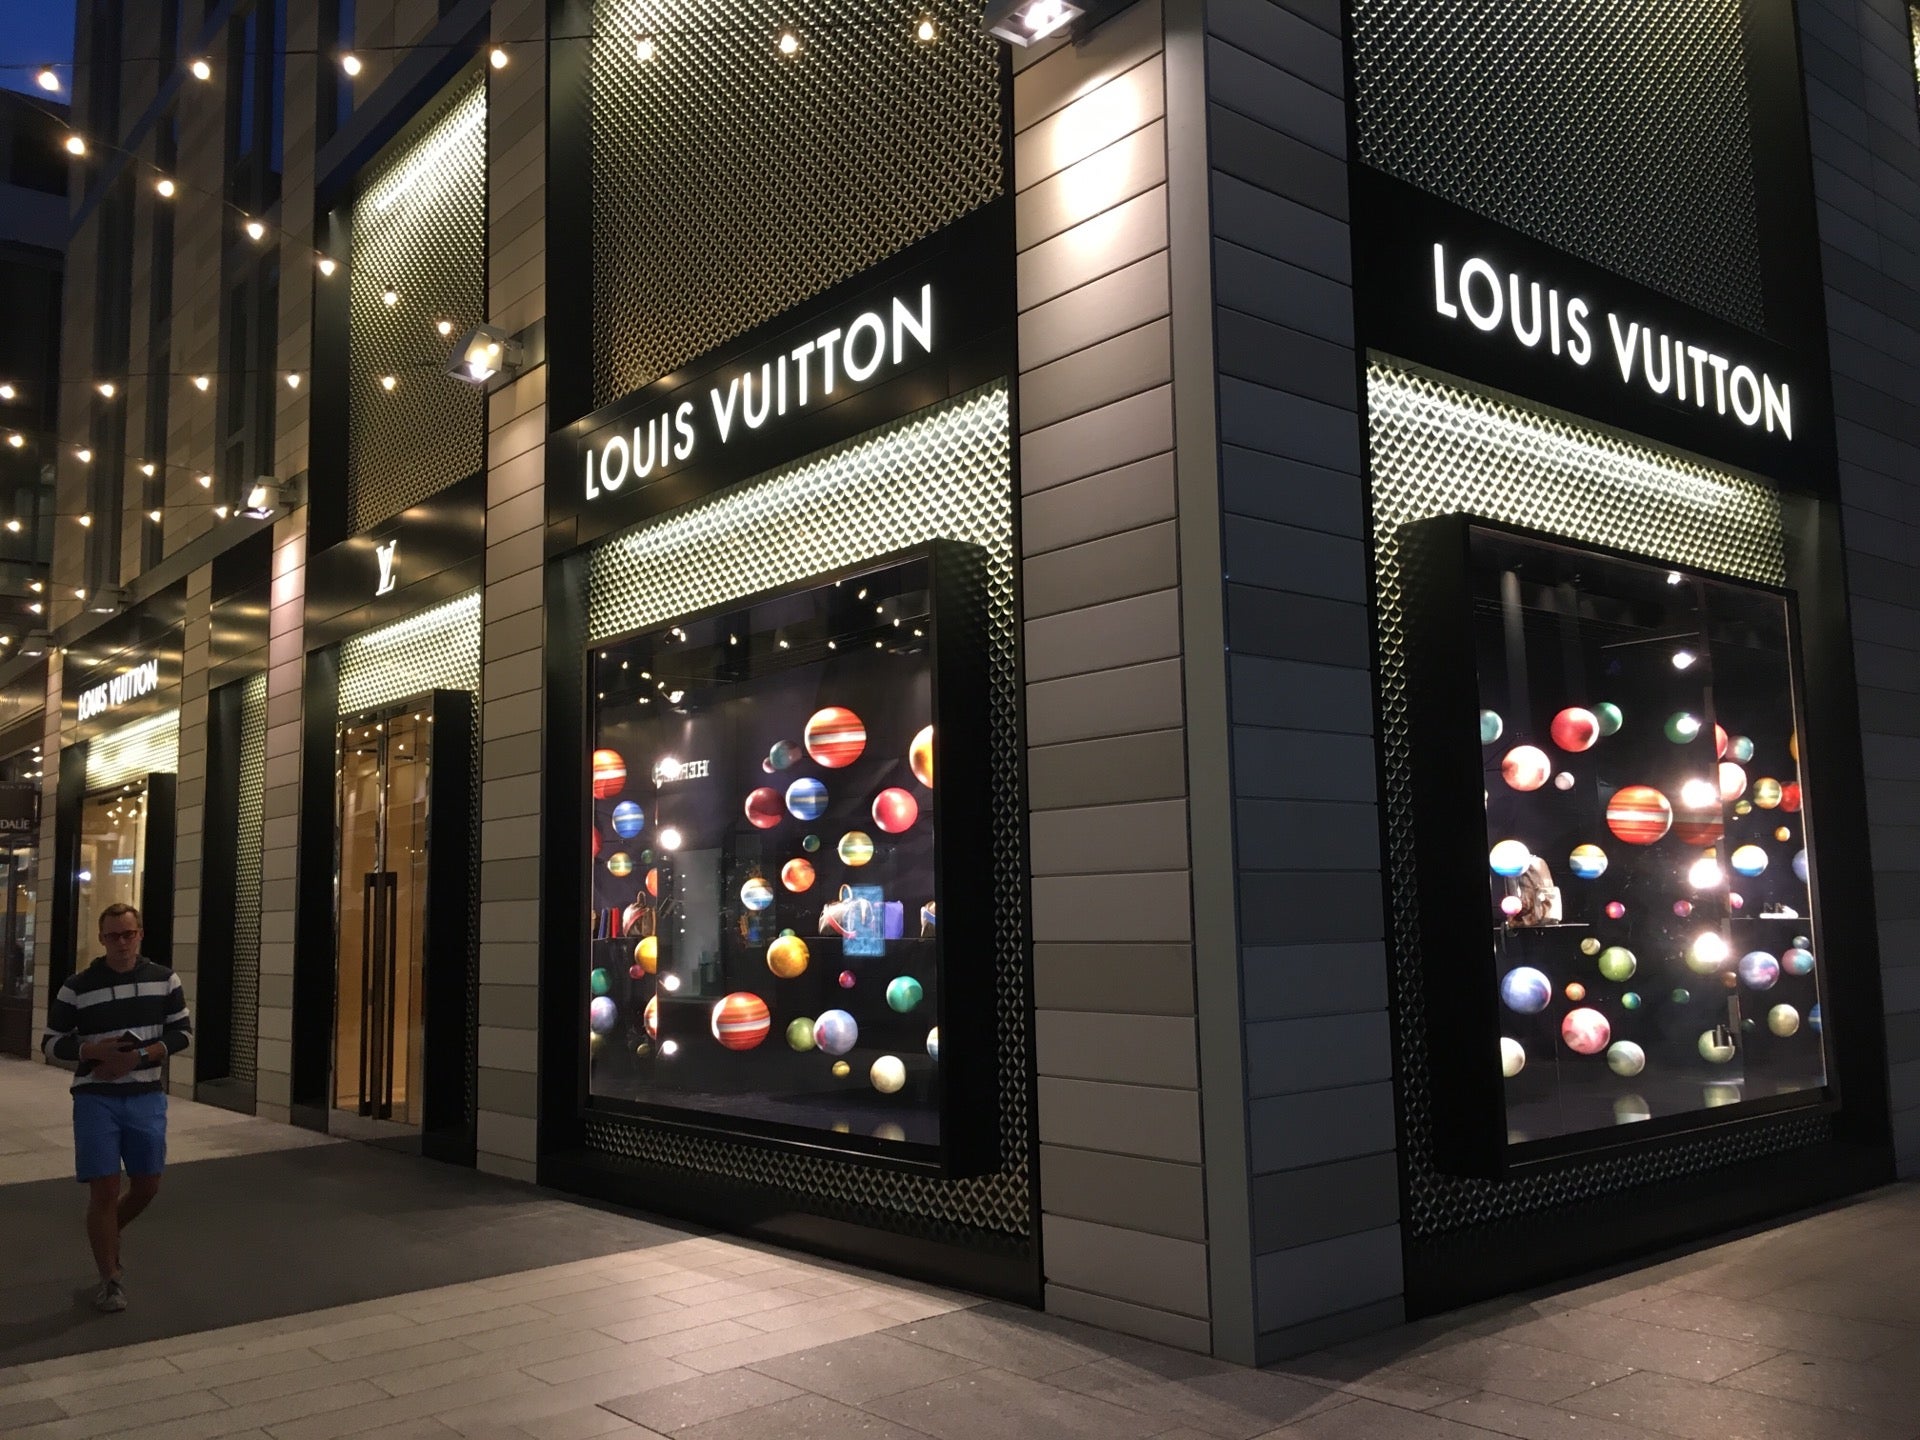 CITYCENTERDC Louis Vuitton Opens at City Center DC